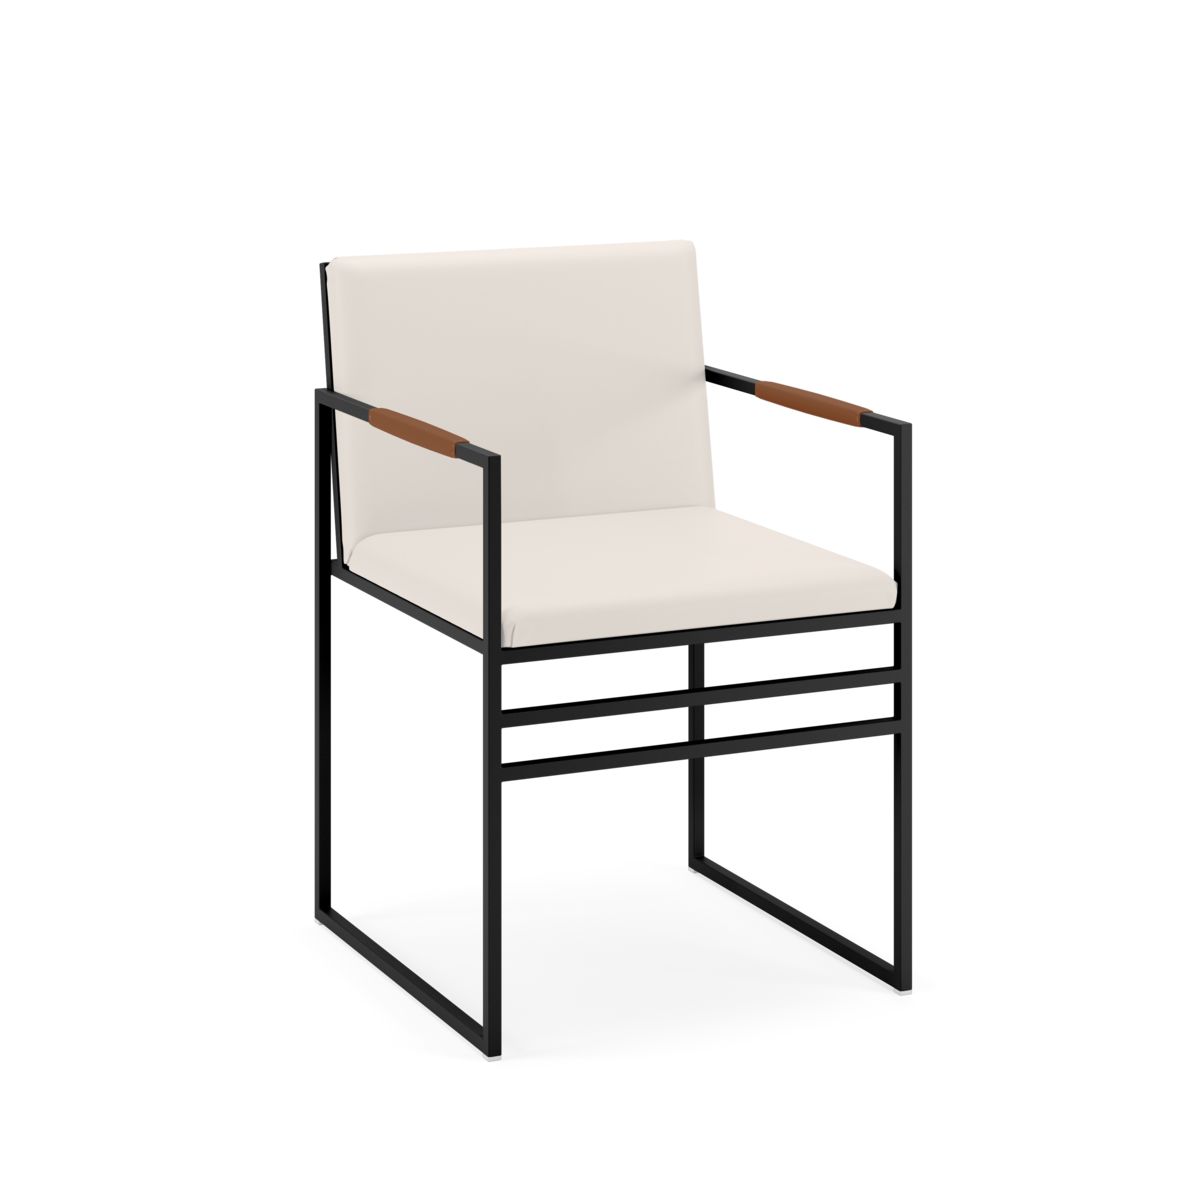 Sella Chair | By Crea US